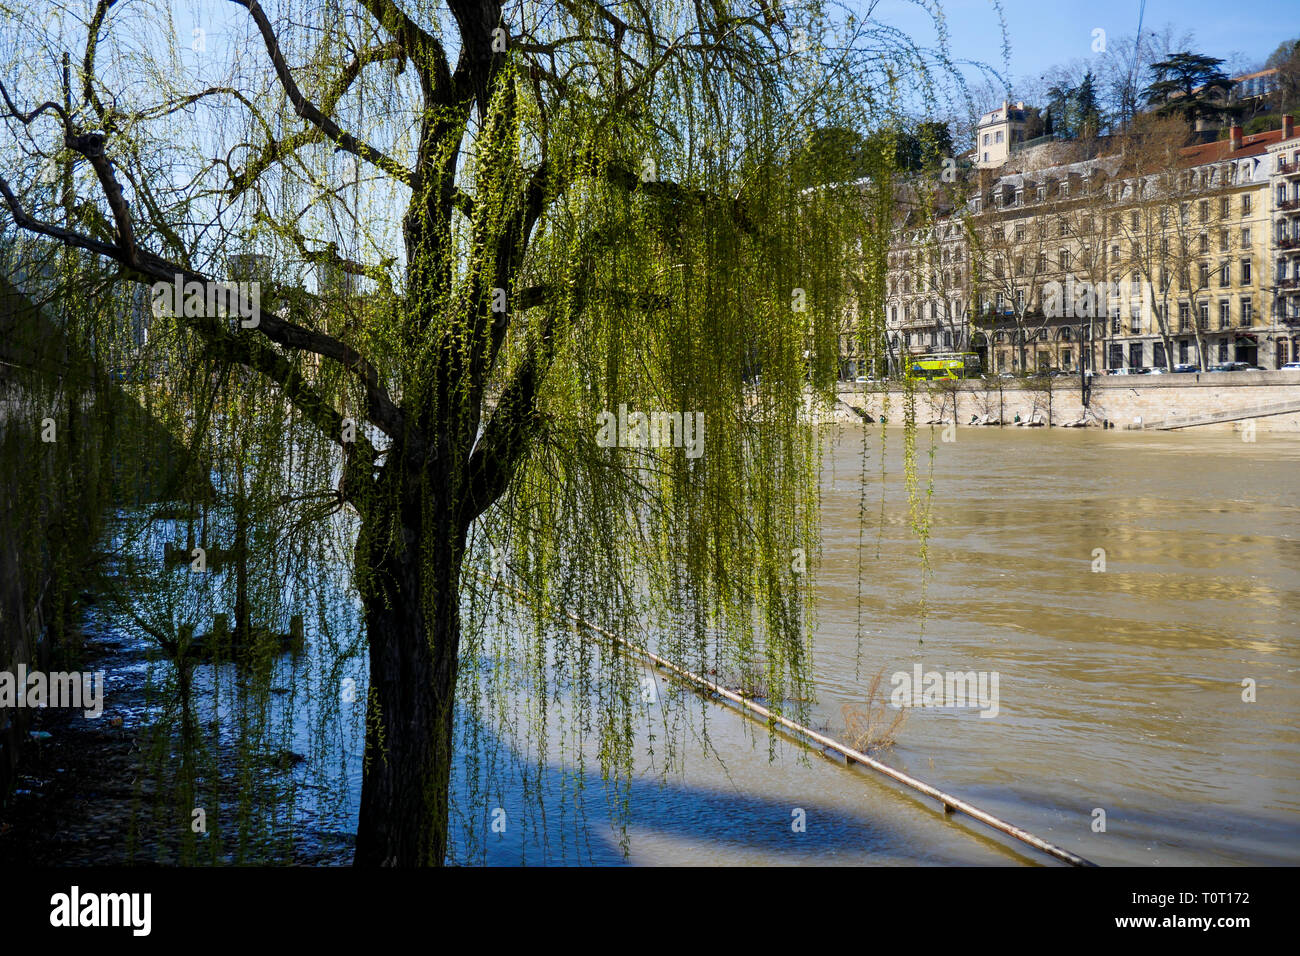 Flooding of River Saone, Lyon, France Stock Photo